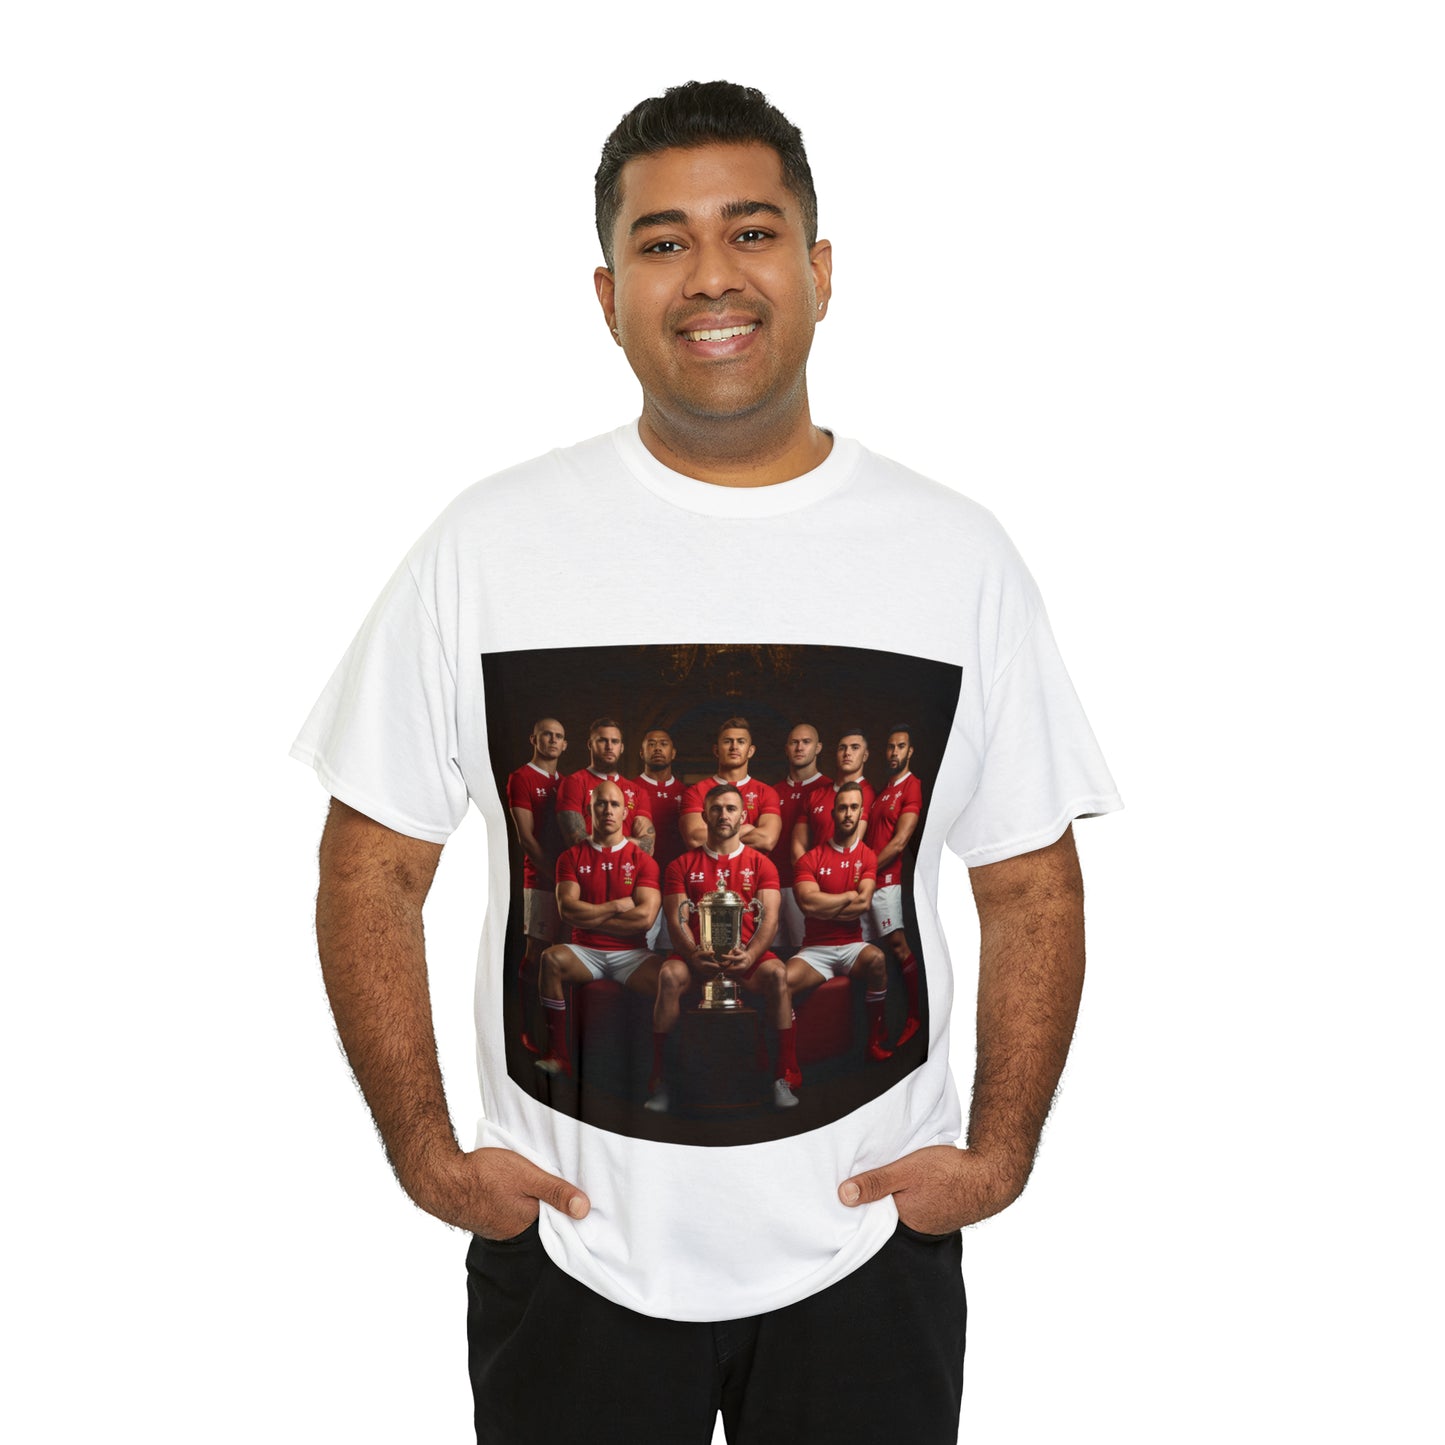 Wales RWC Photoshoot - light shirts